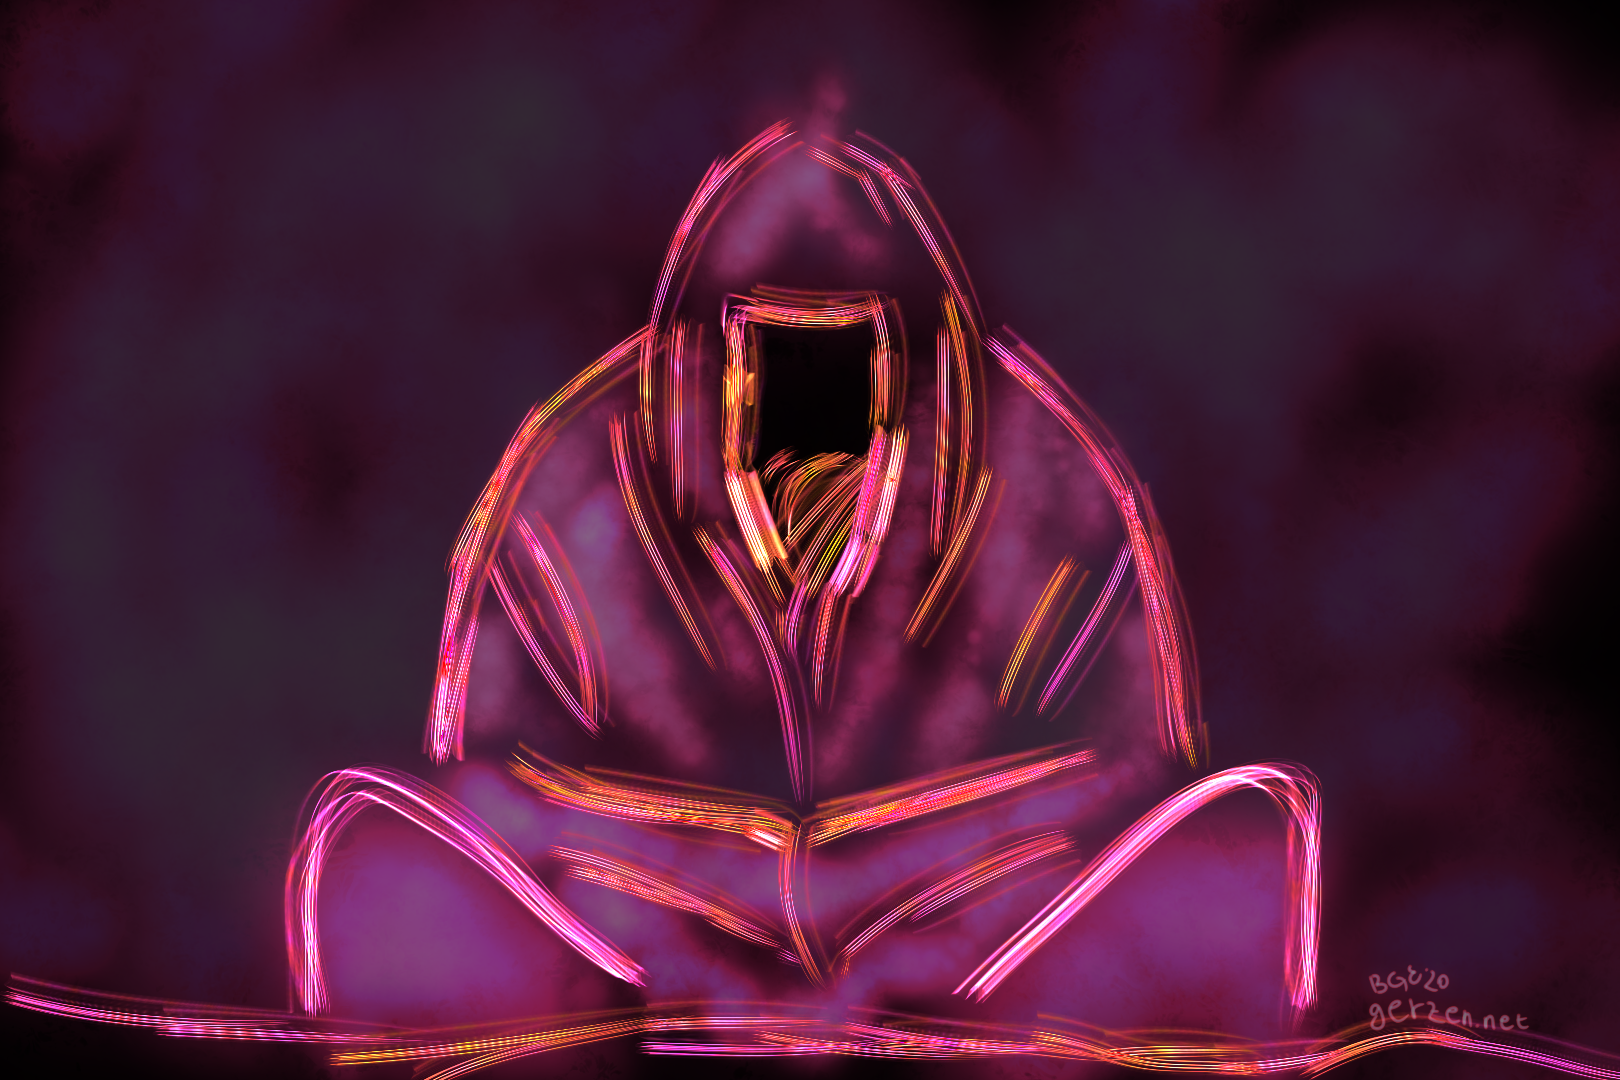 Mönch in der Meditation